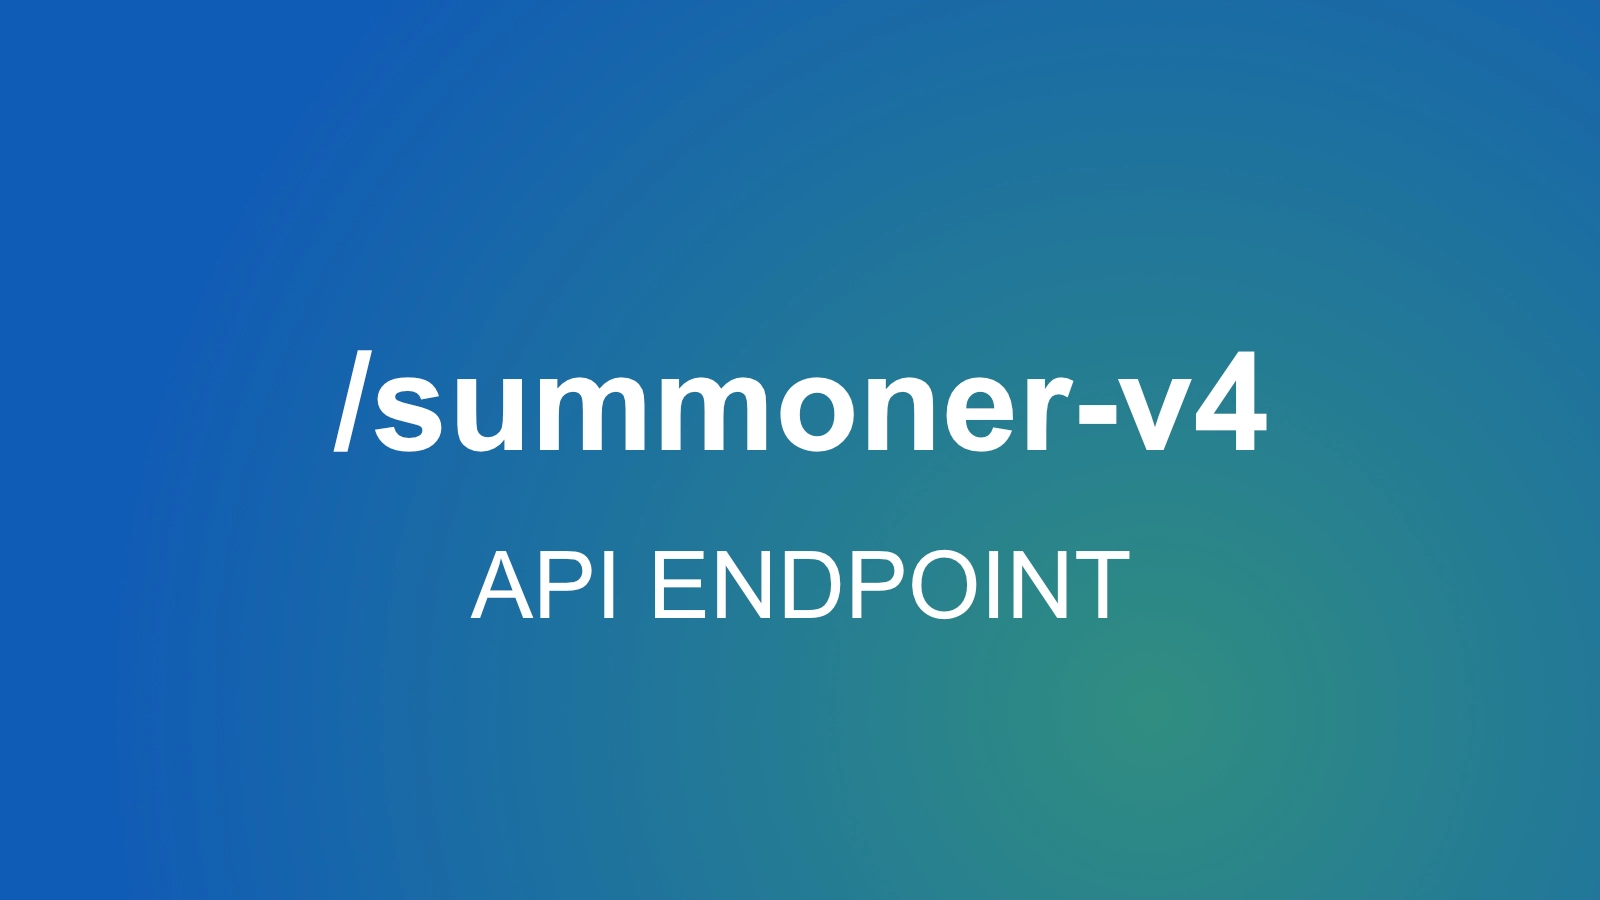 Using the summoner-v4 API